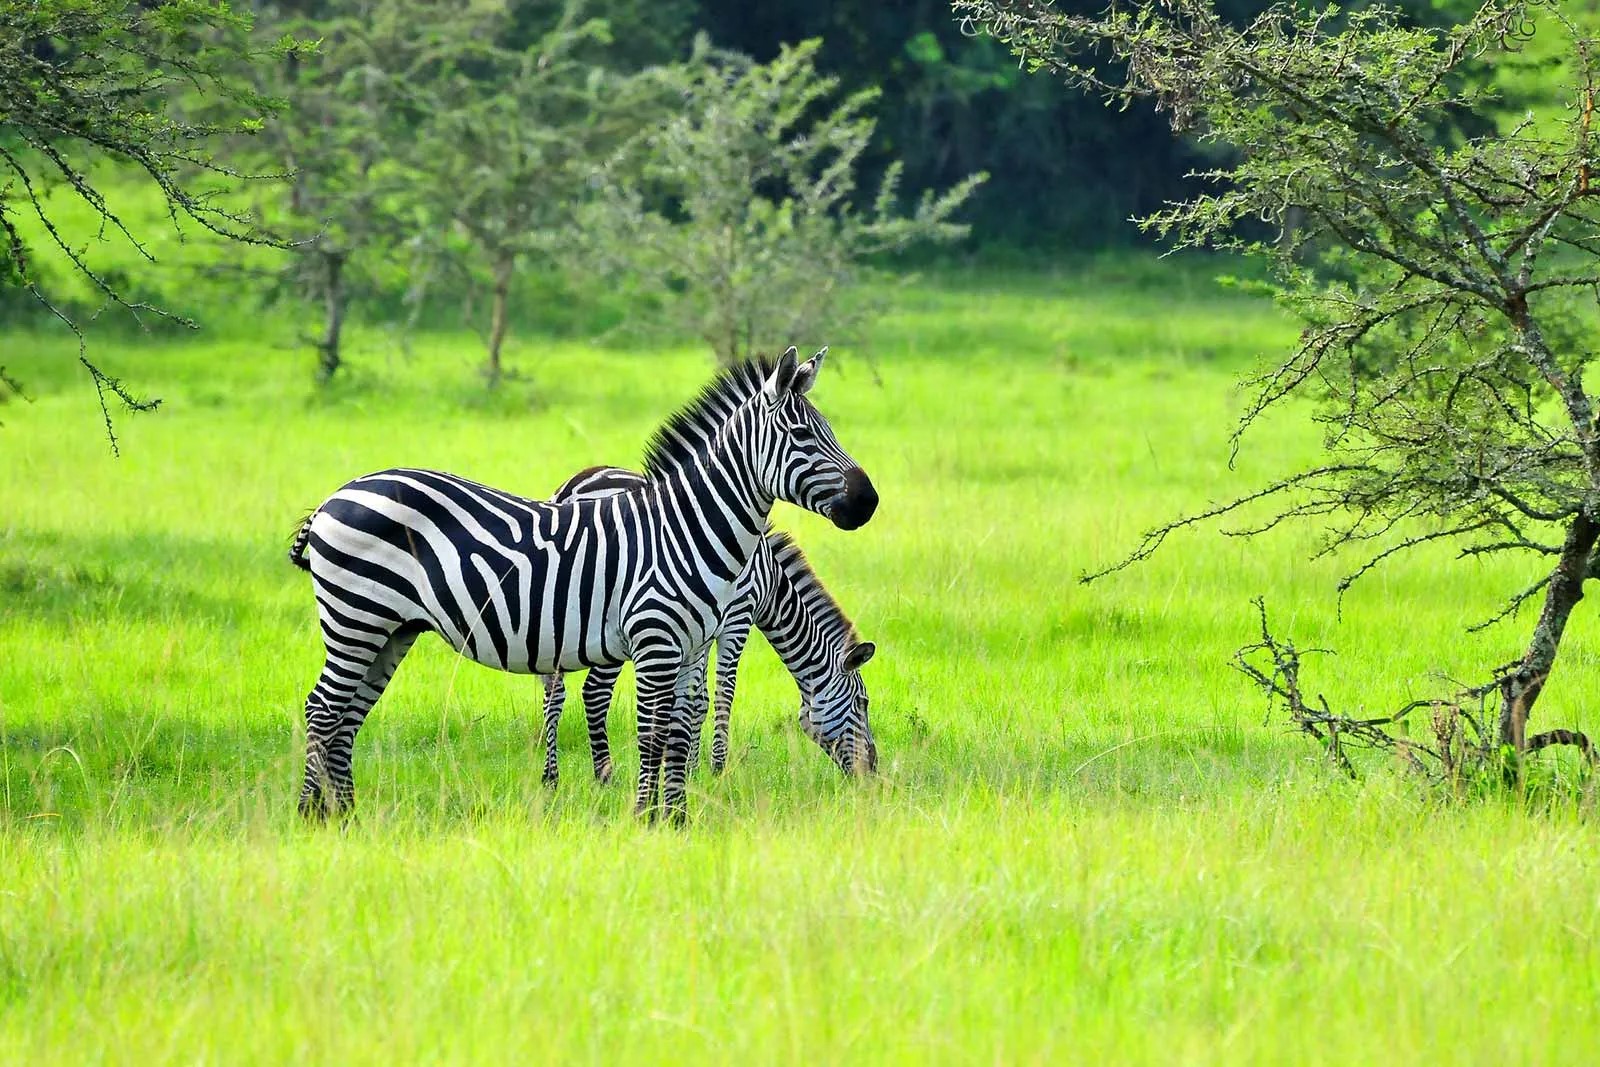 Zebras in Africa - Facts | Habitant